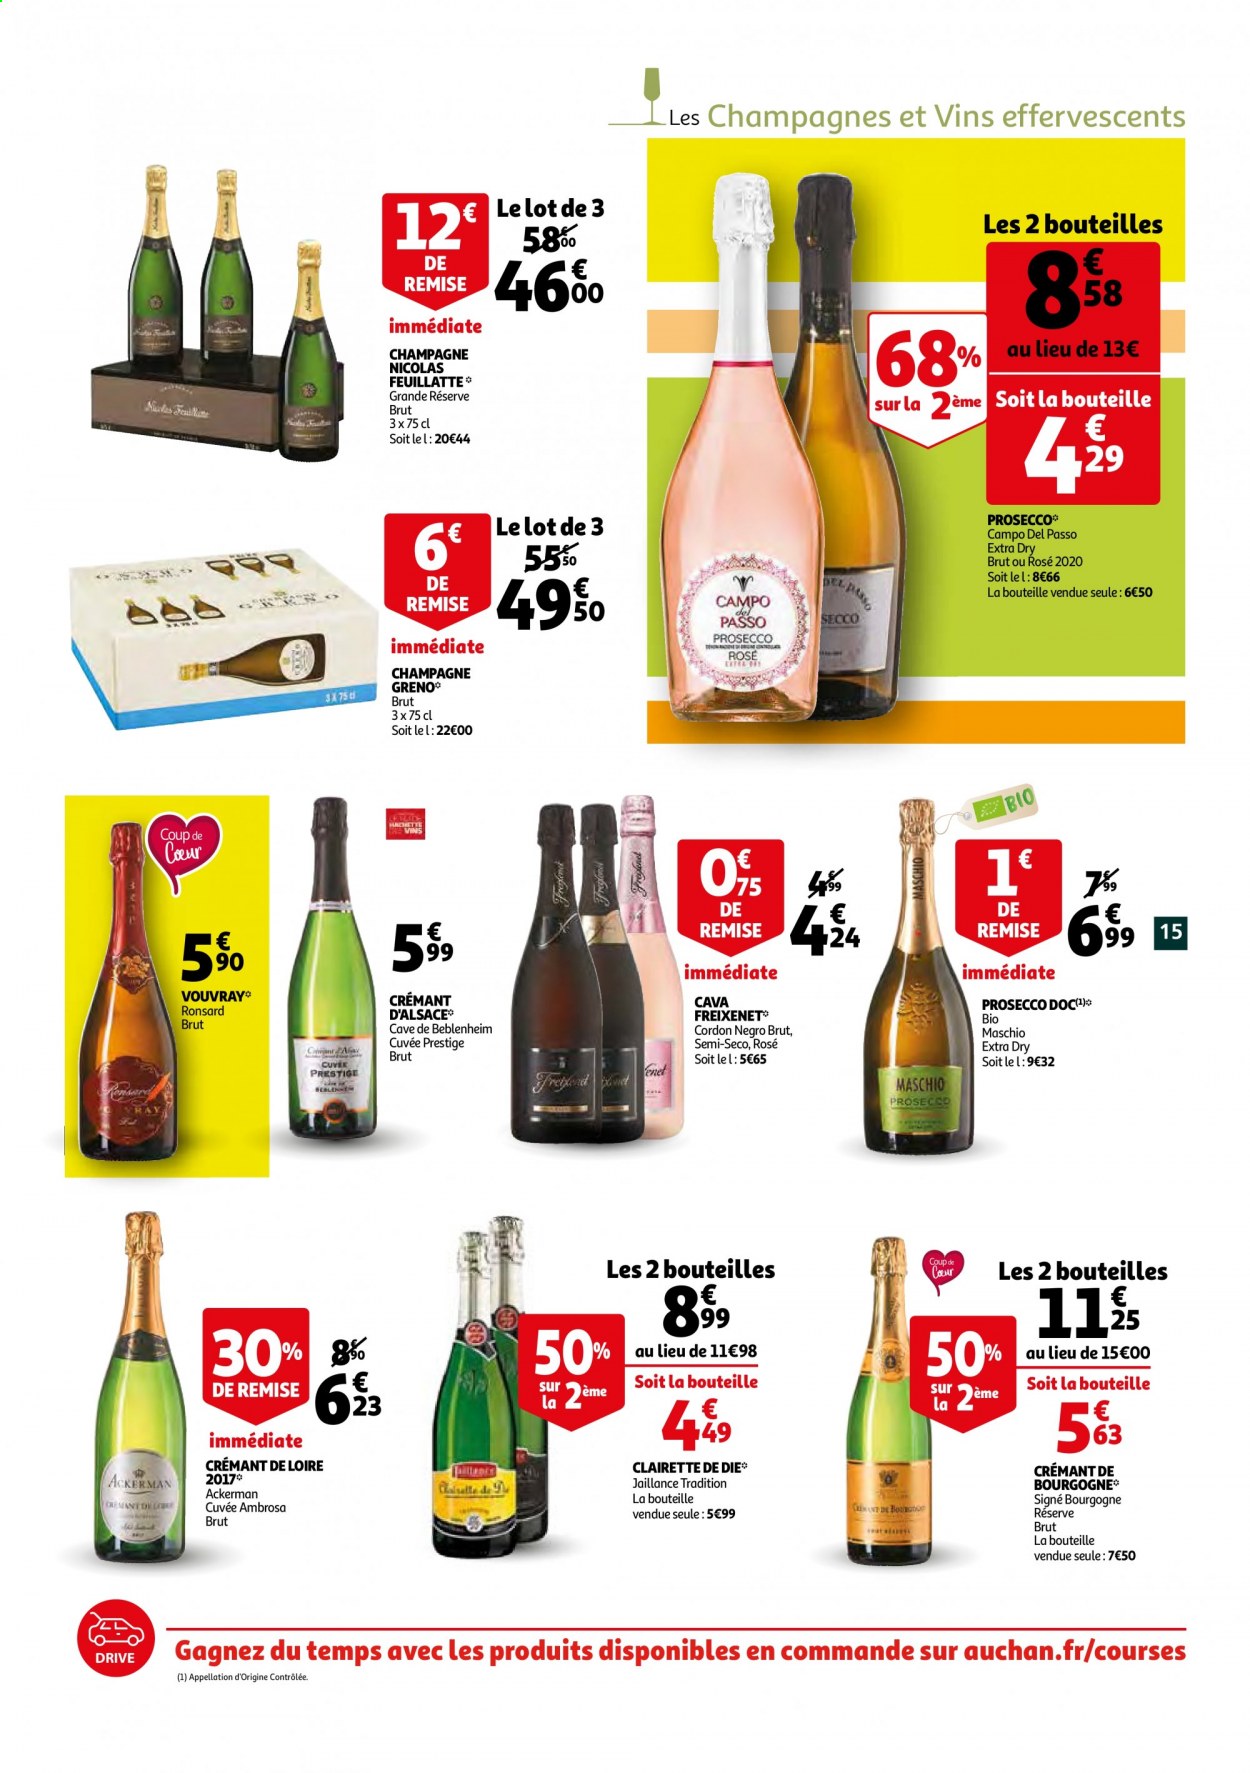 Catalogue Auchan - 10.03.2021 - 23.03.2021. 